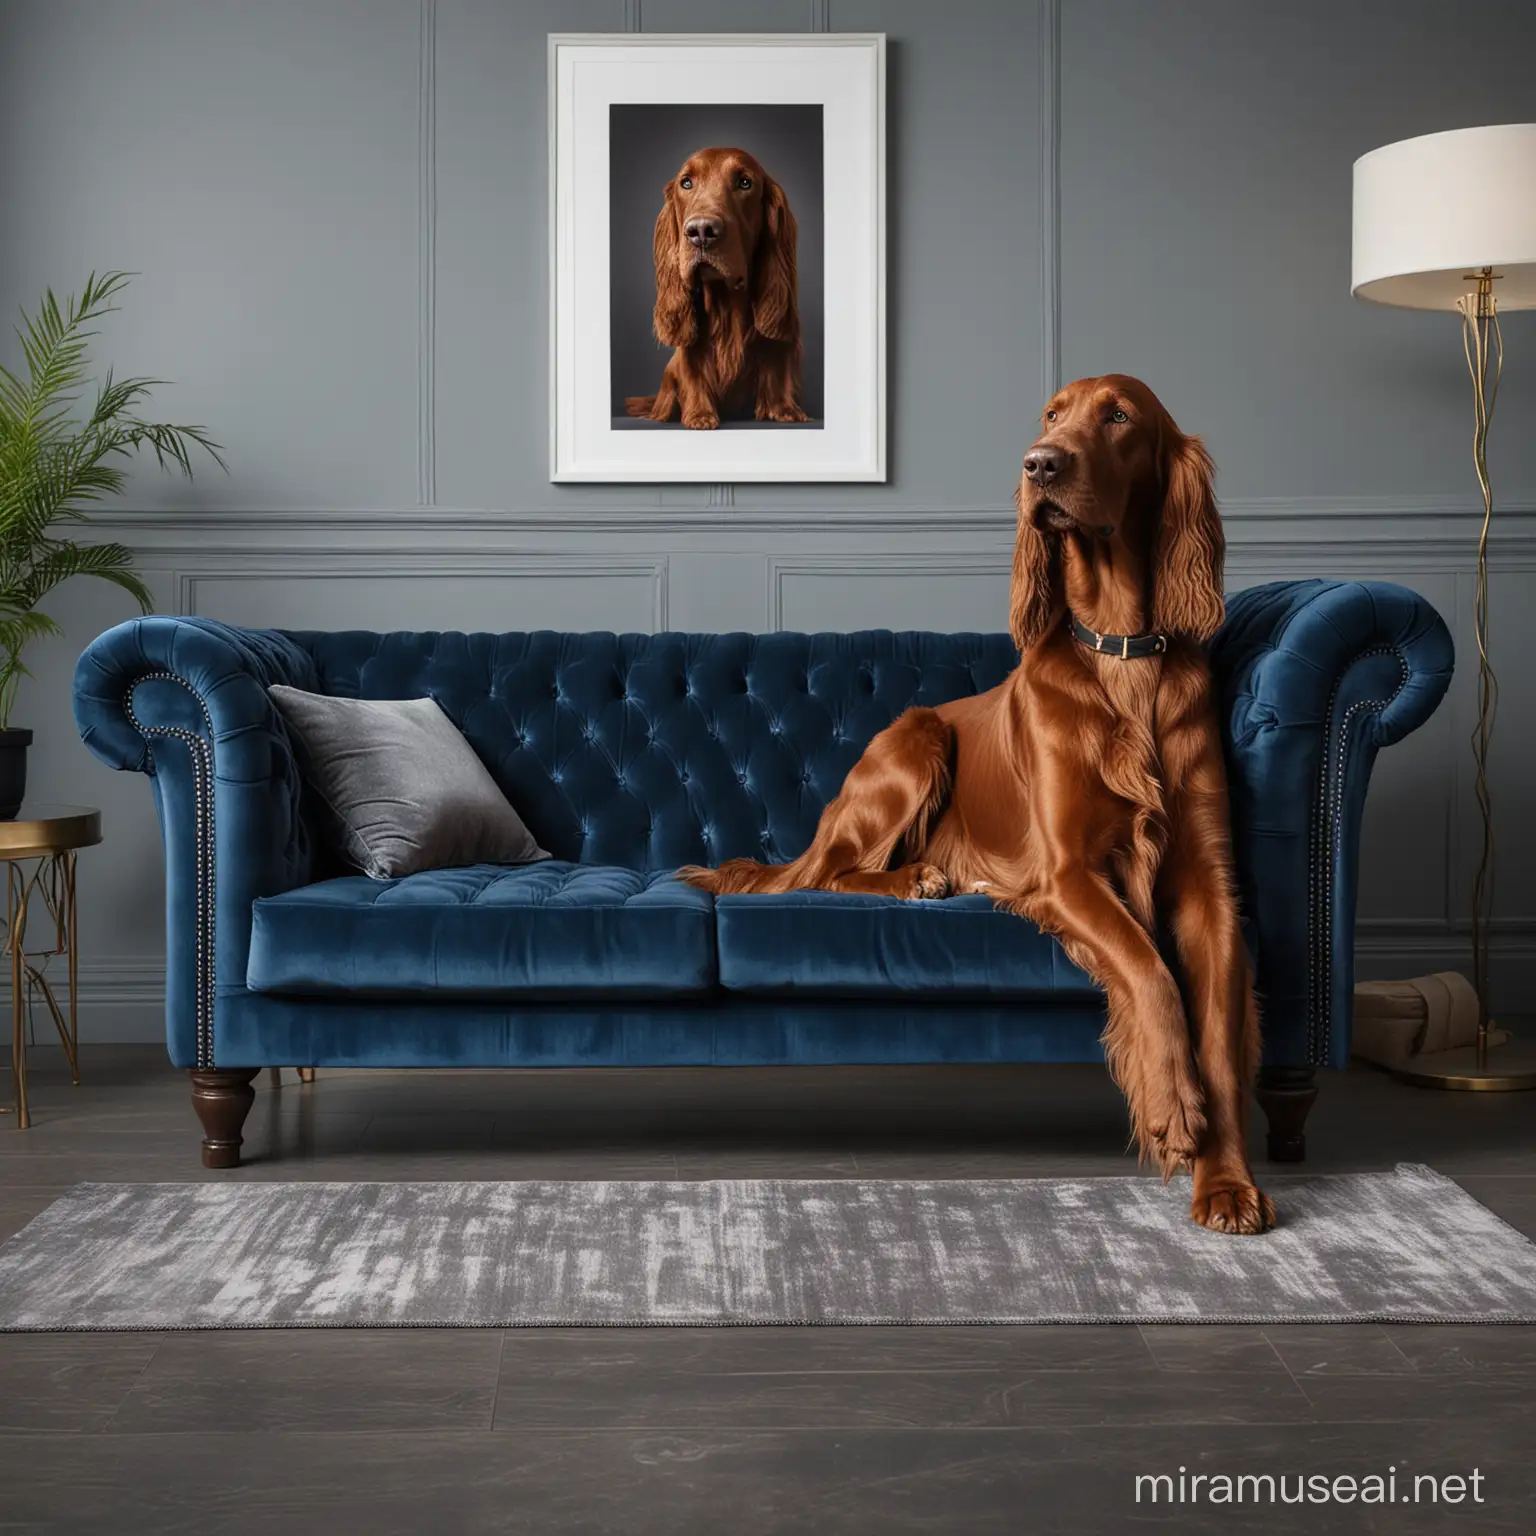 an irish setter dog sitting on a beautiful modern dark blue sofa in an incredible glamour style modern living room

